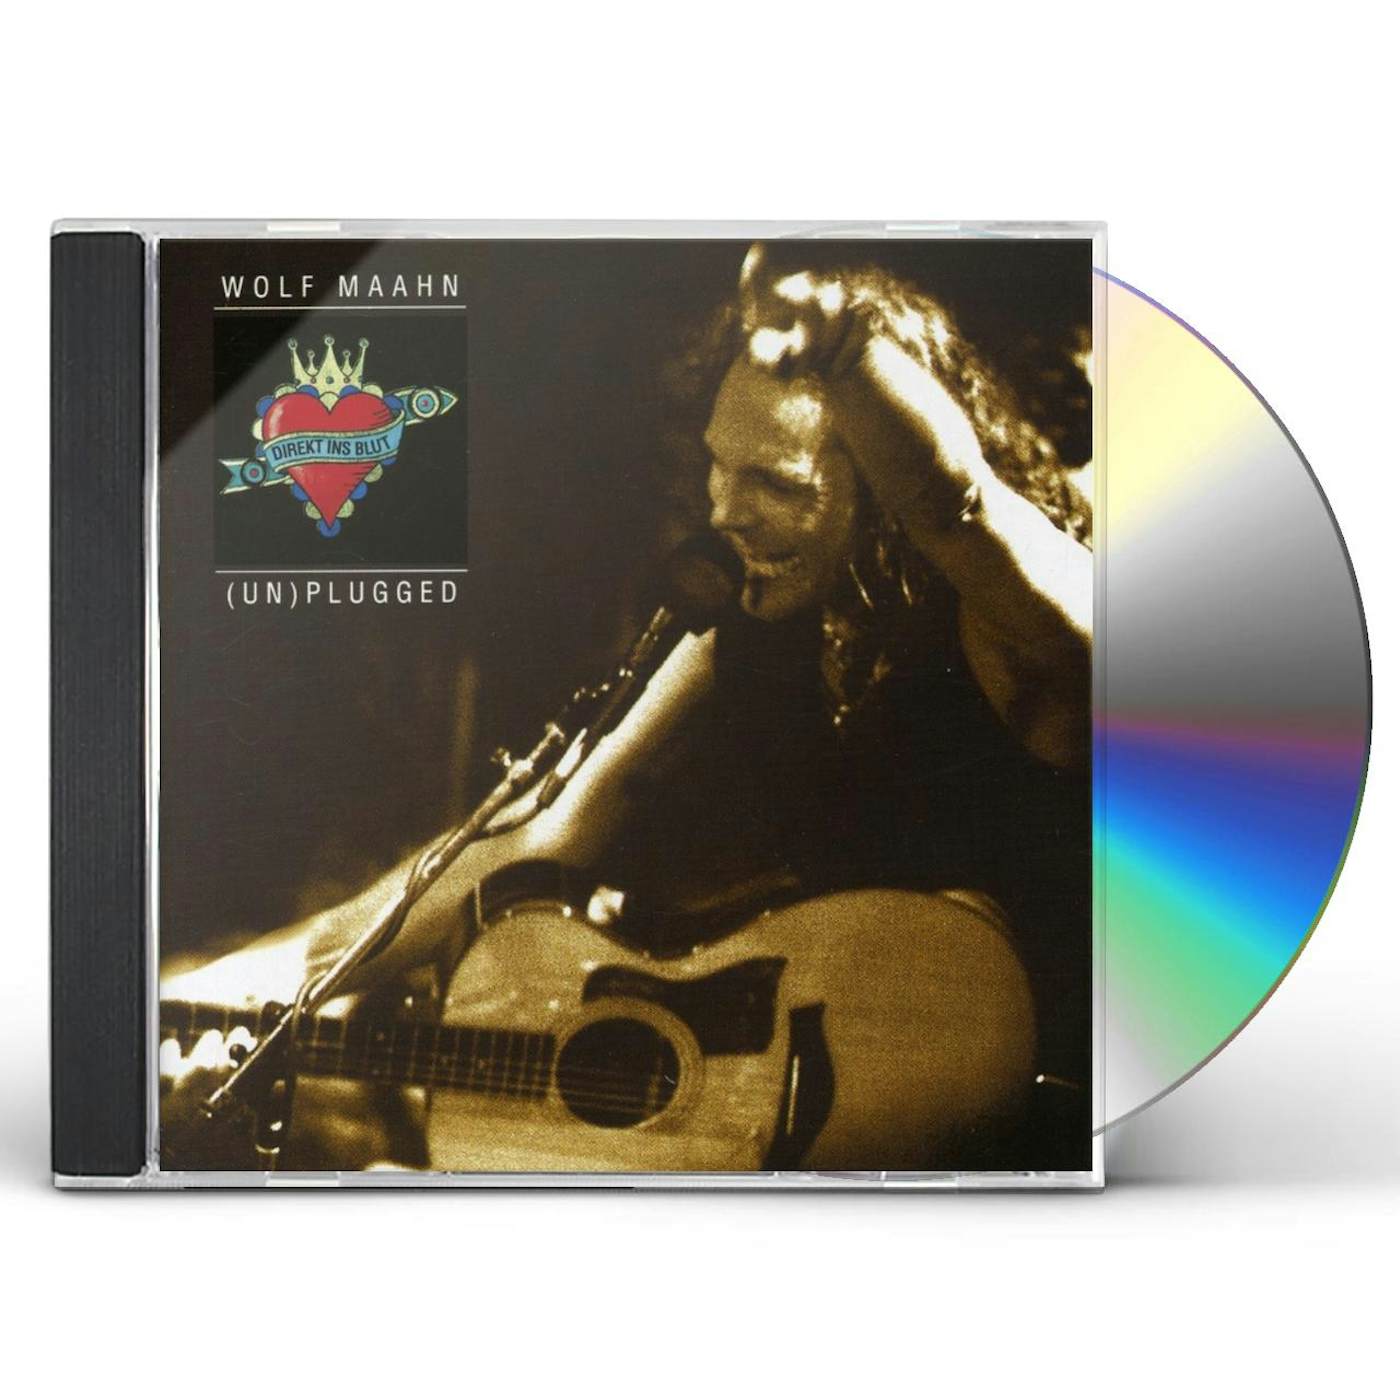 Wolf Maahn DIREKT INS BLUT: UNPLUGGED CD